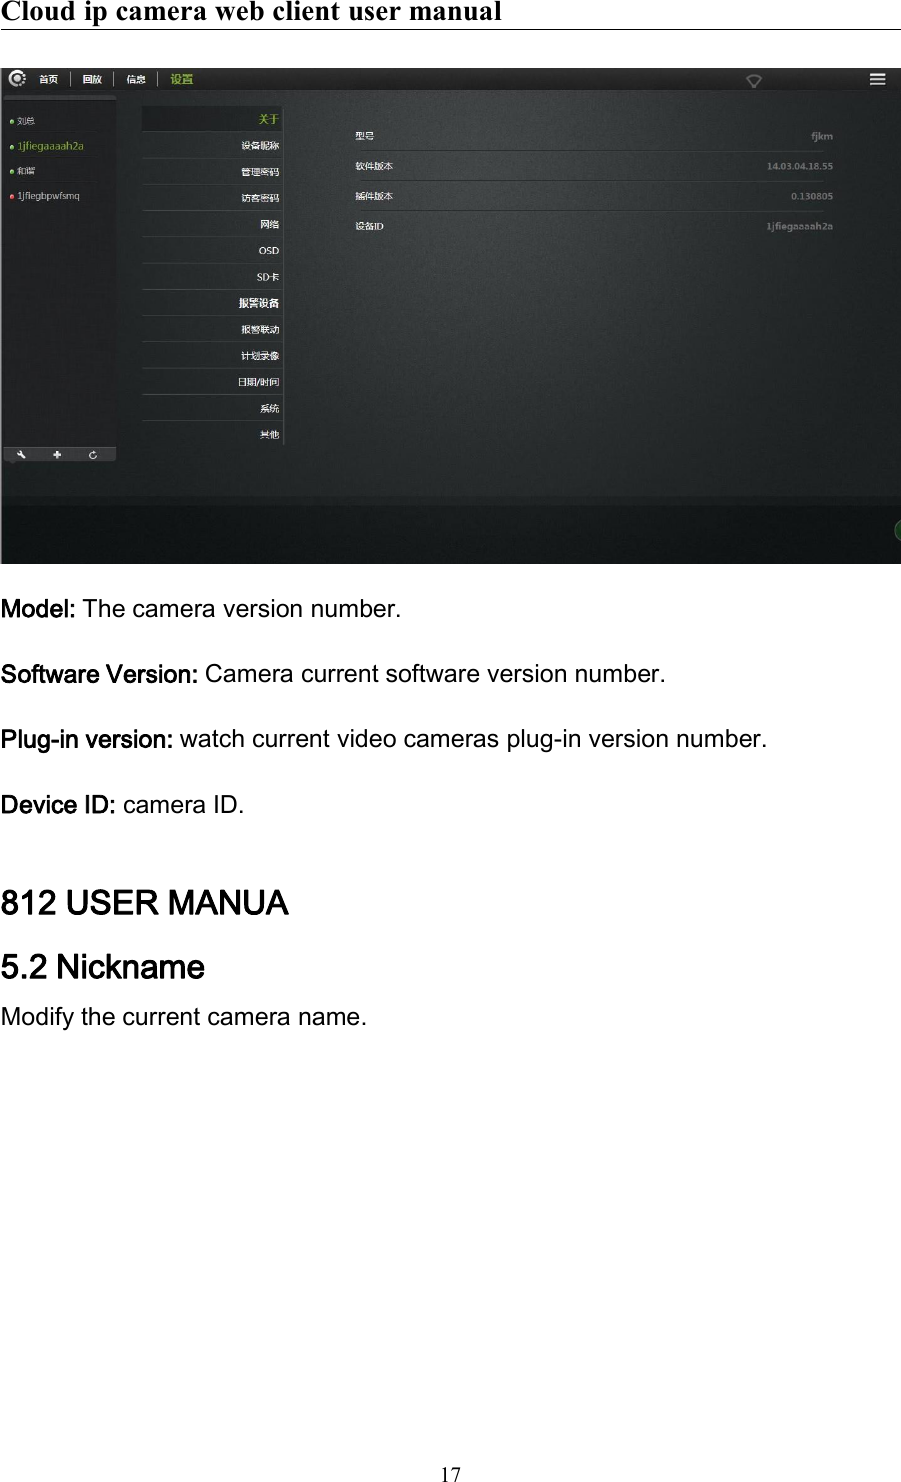 Cloud ip camera web client user manual17Model: The camera version number.Software Version: Camera current software version number.Plug-in version: watch current video cameras plug-in version number.Device ID: camera ID.812 USER MANUA5.2 NicknameModify the current camera name.